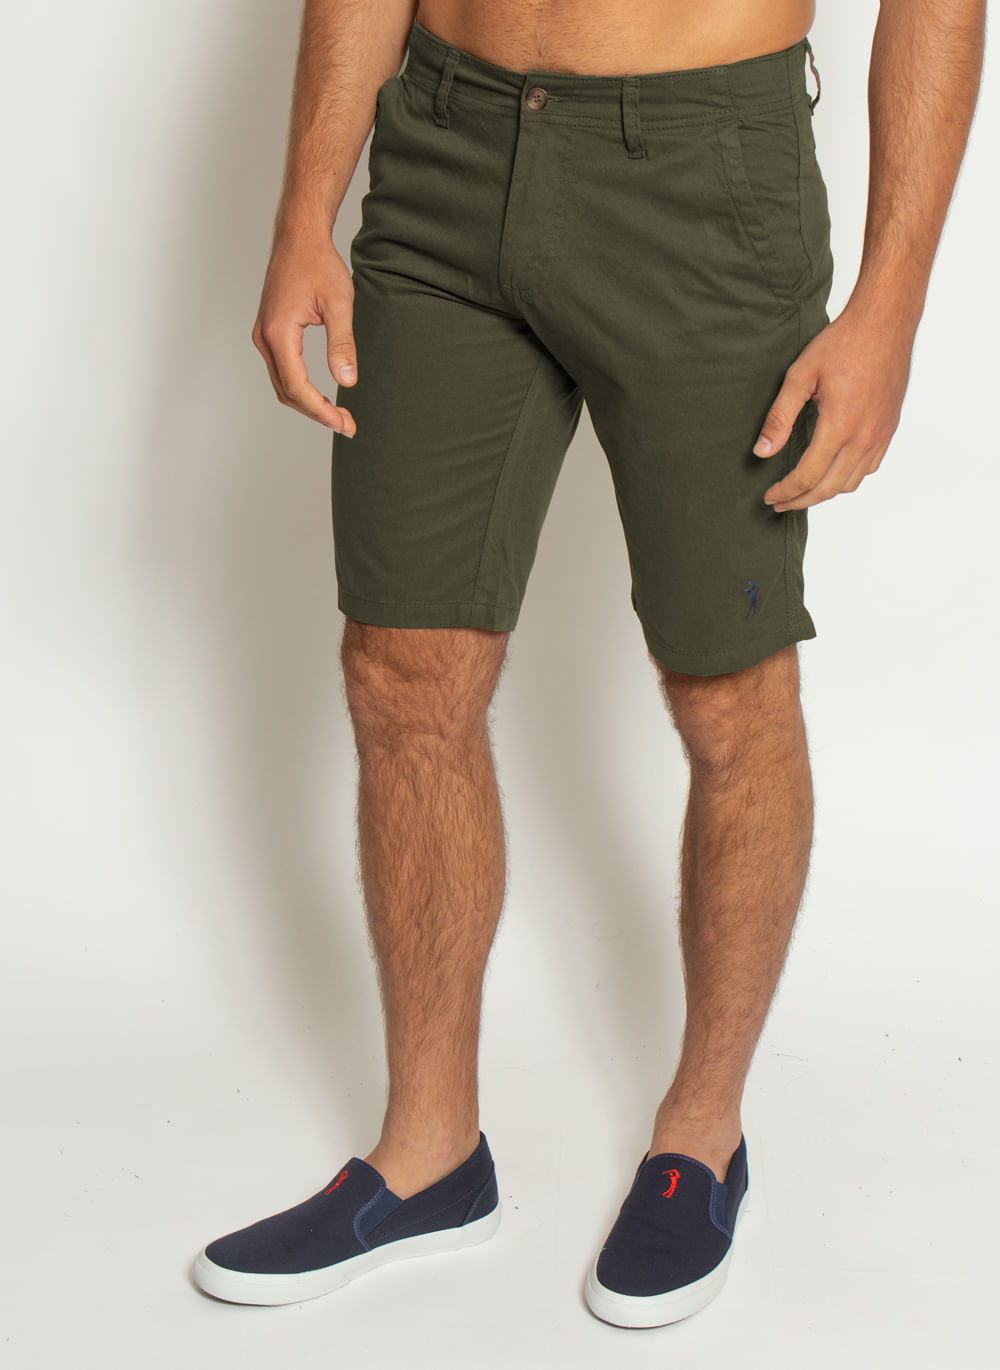 bermuda-masculina-aleatory-sarja-style-verde-modelo-2-